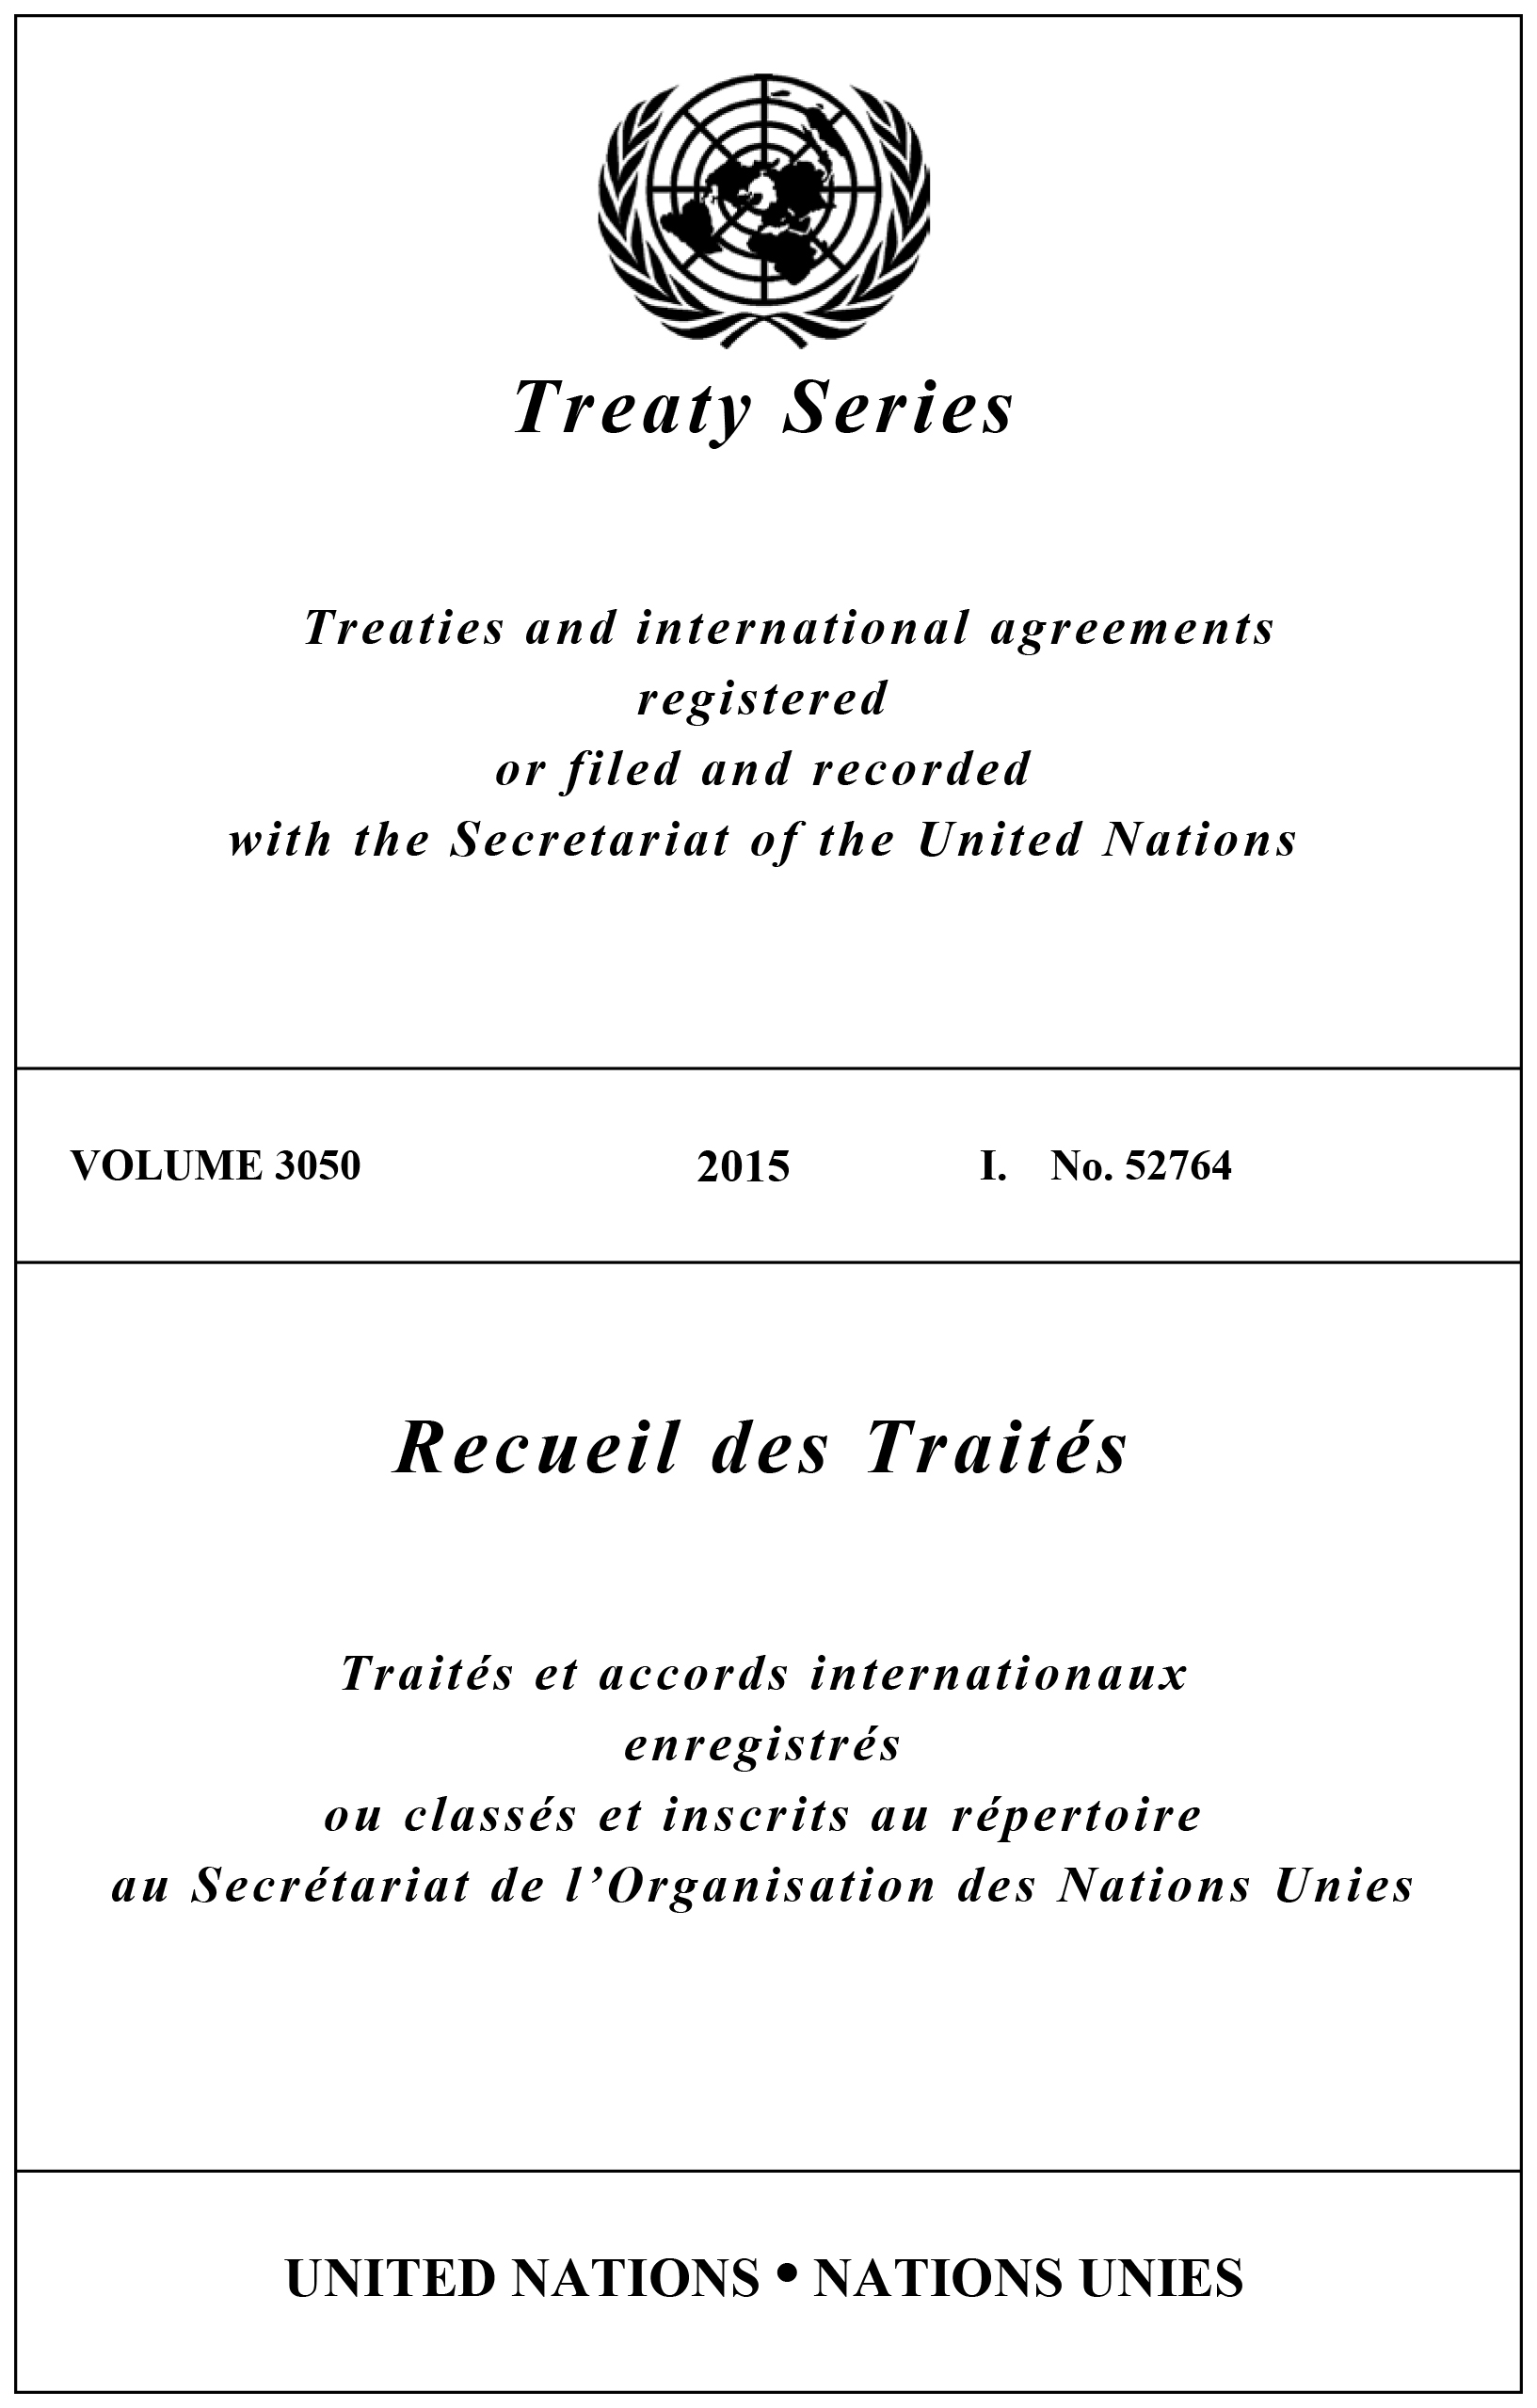 image of Treaty Series 3050